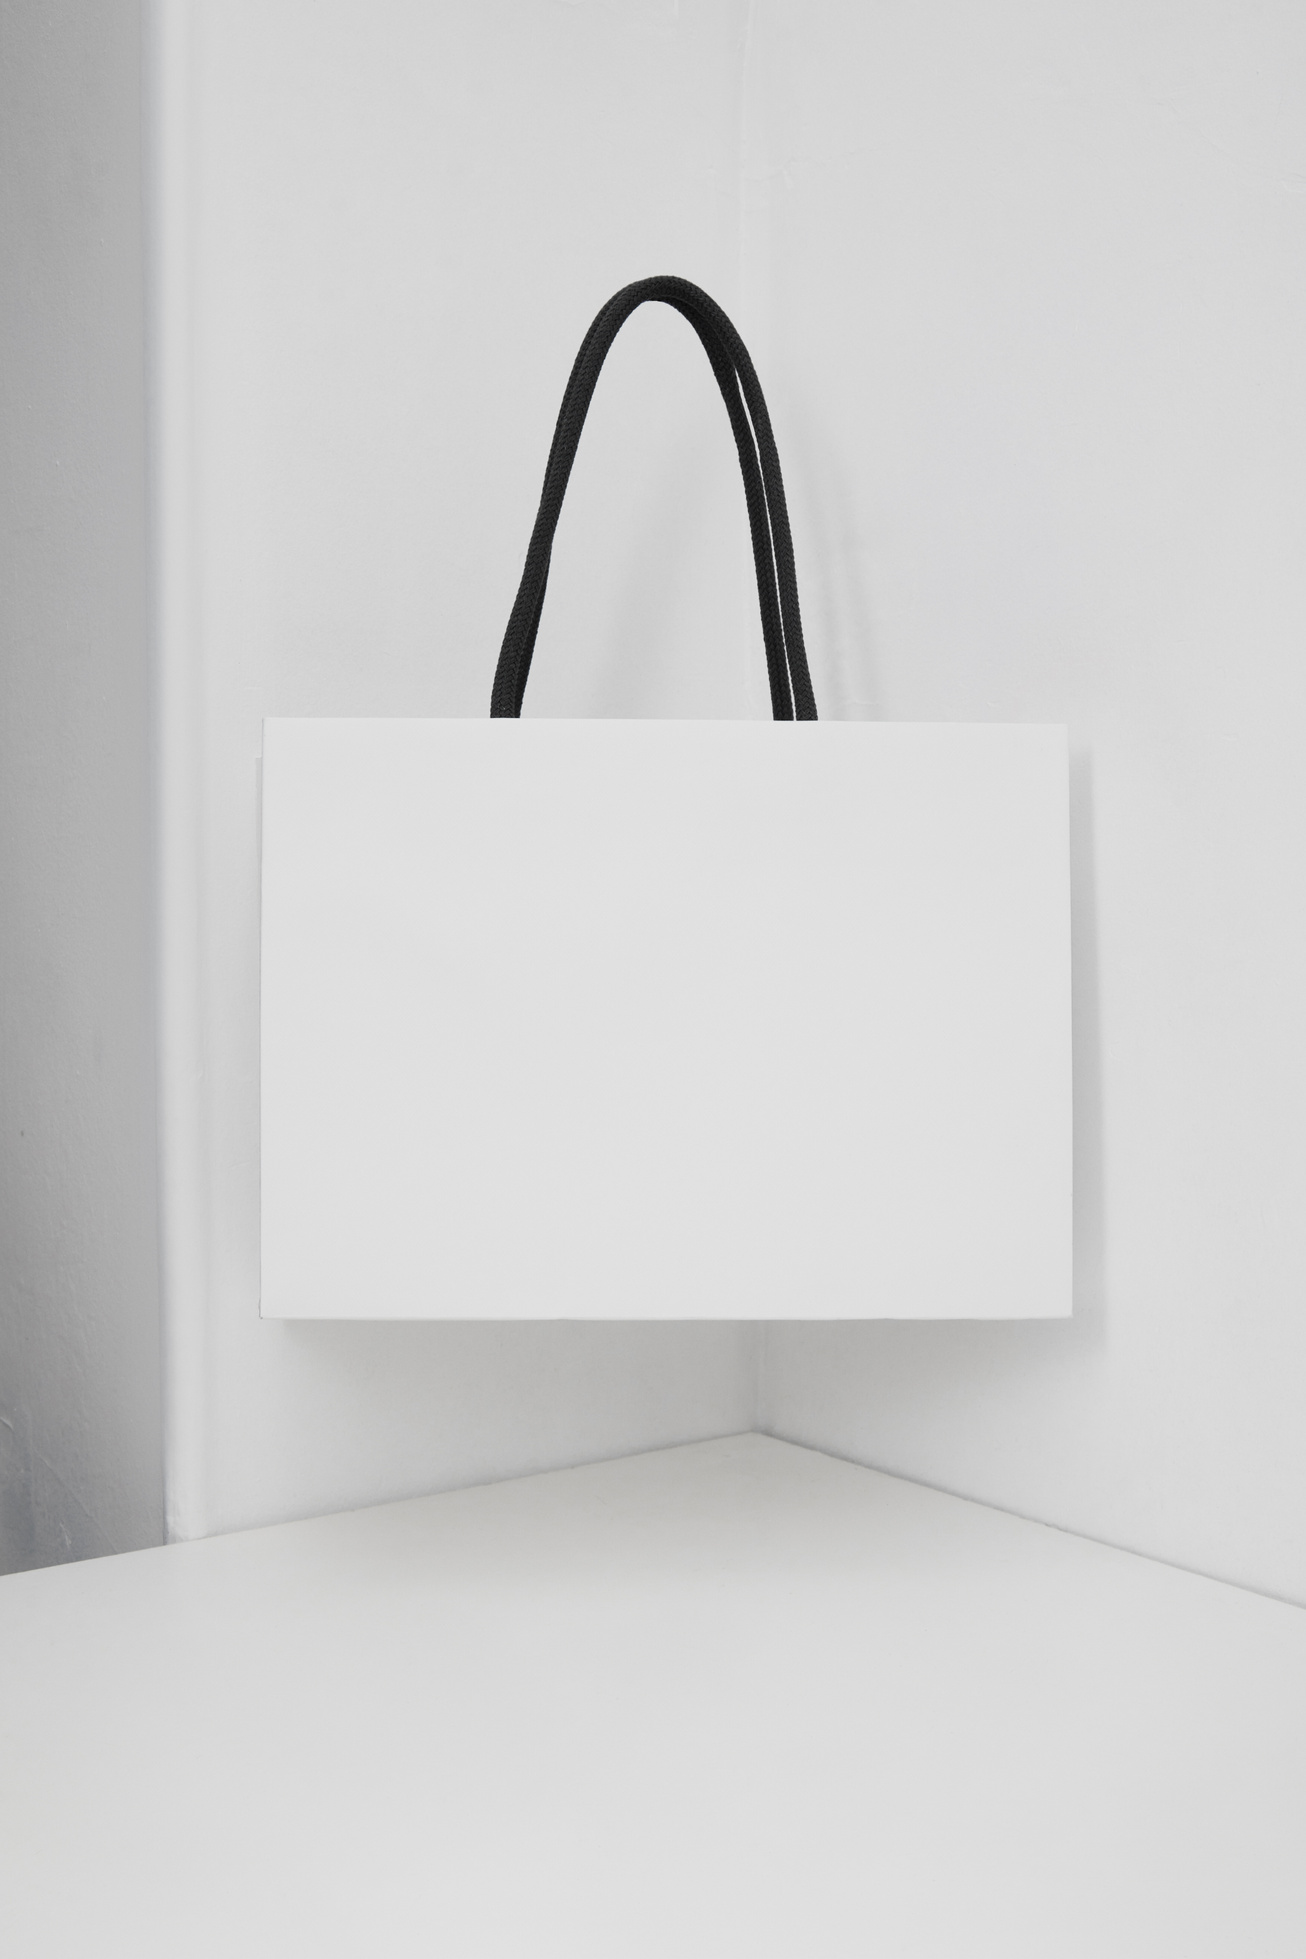 White Shopping Bag Mockup